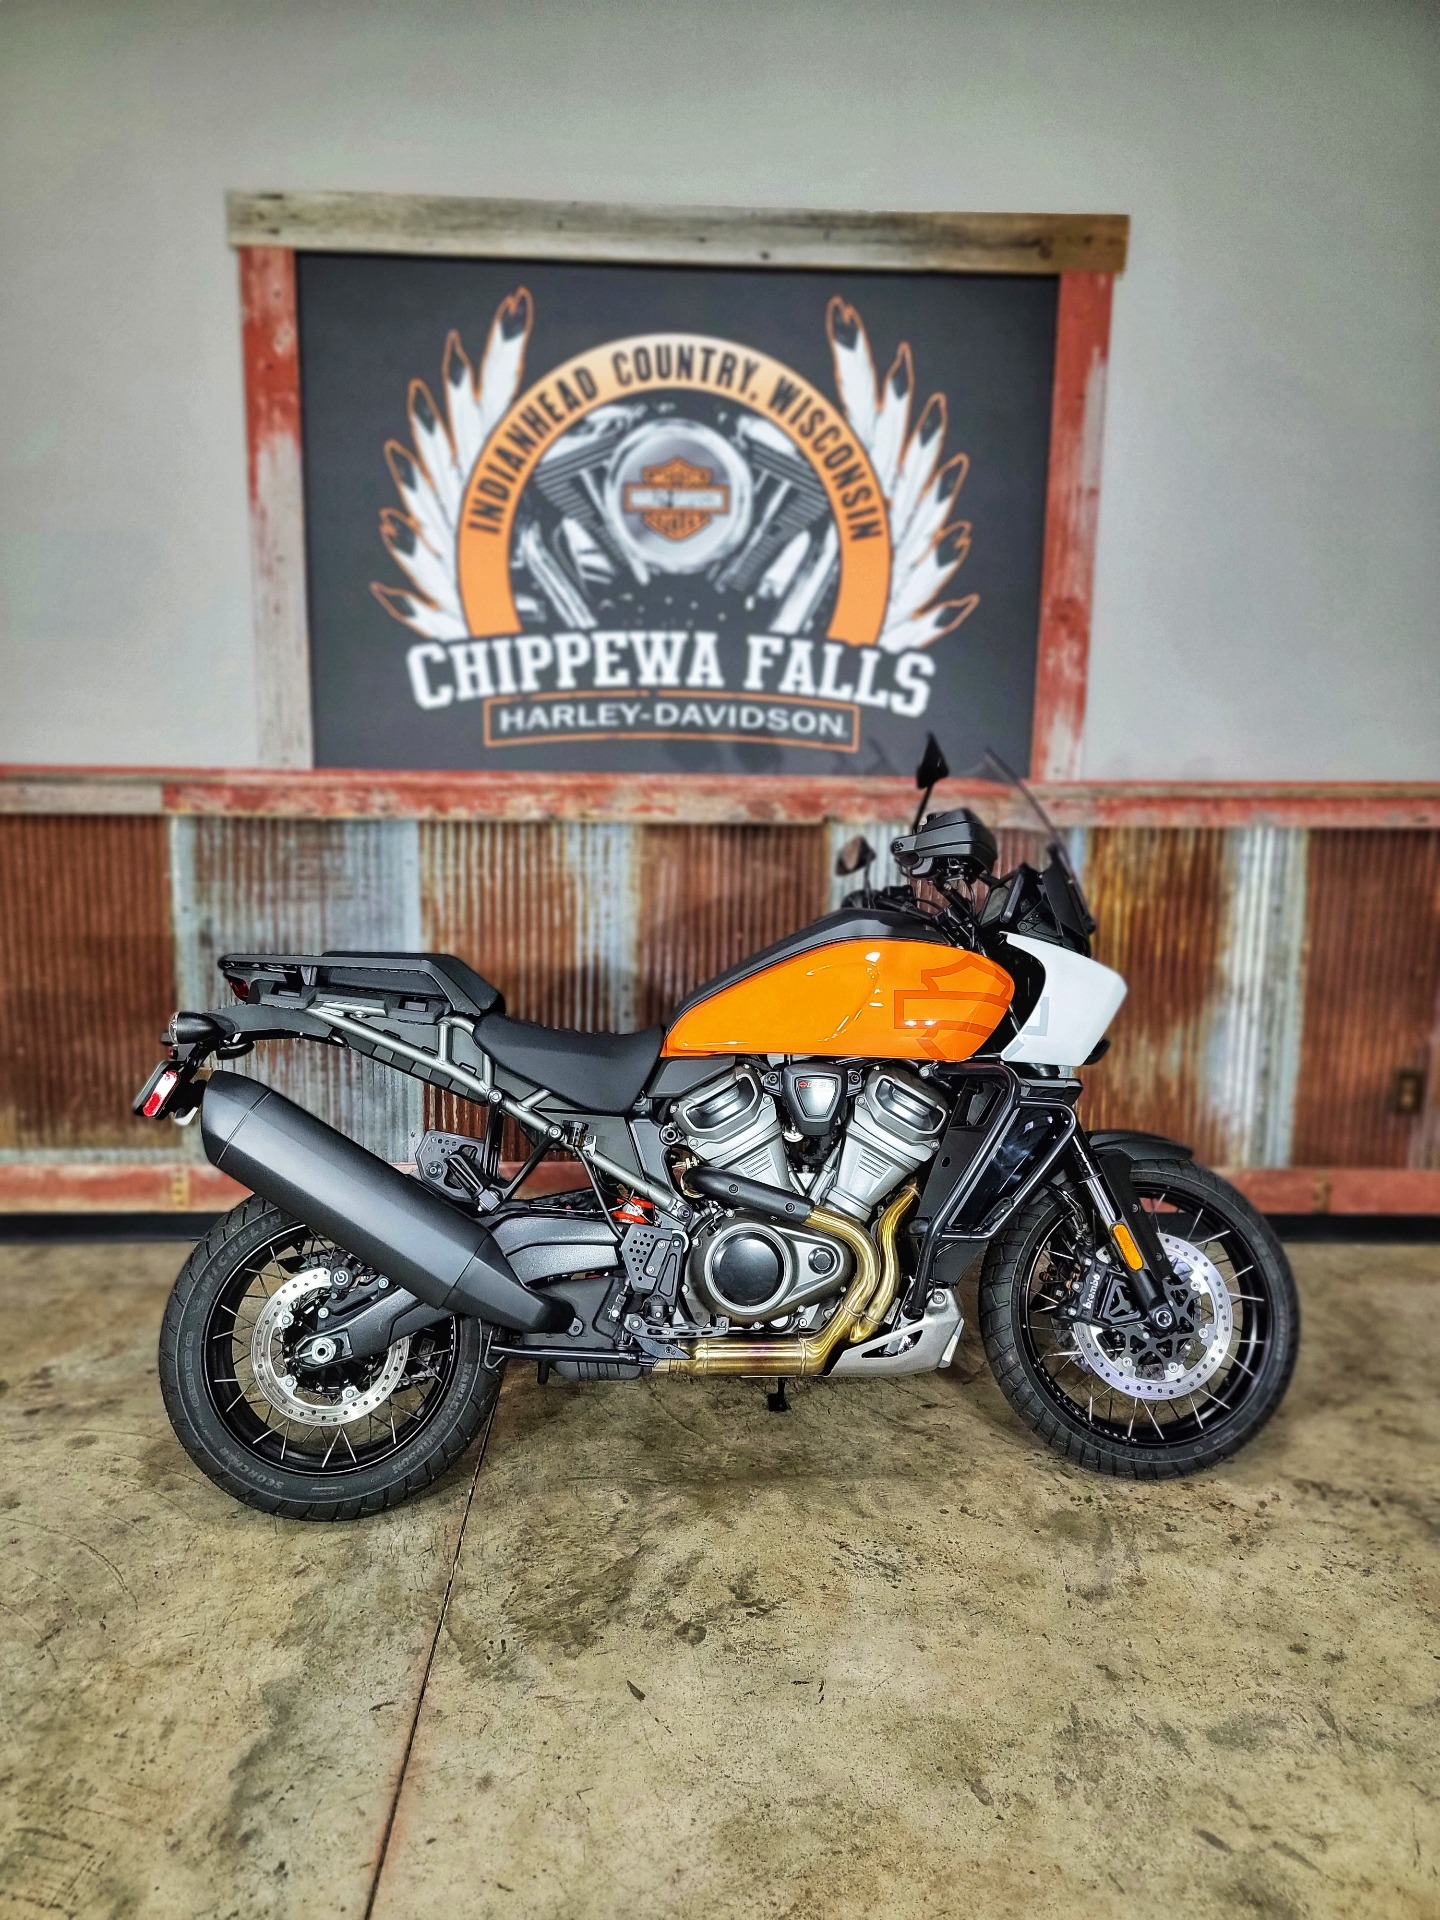 New 2021 Harley Davidson Pan America Special Baja Orange Stone Washed White Pearl Motorcycles In Chippewa Falls Wi Du305133